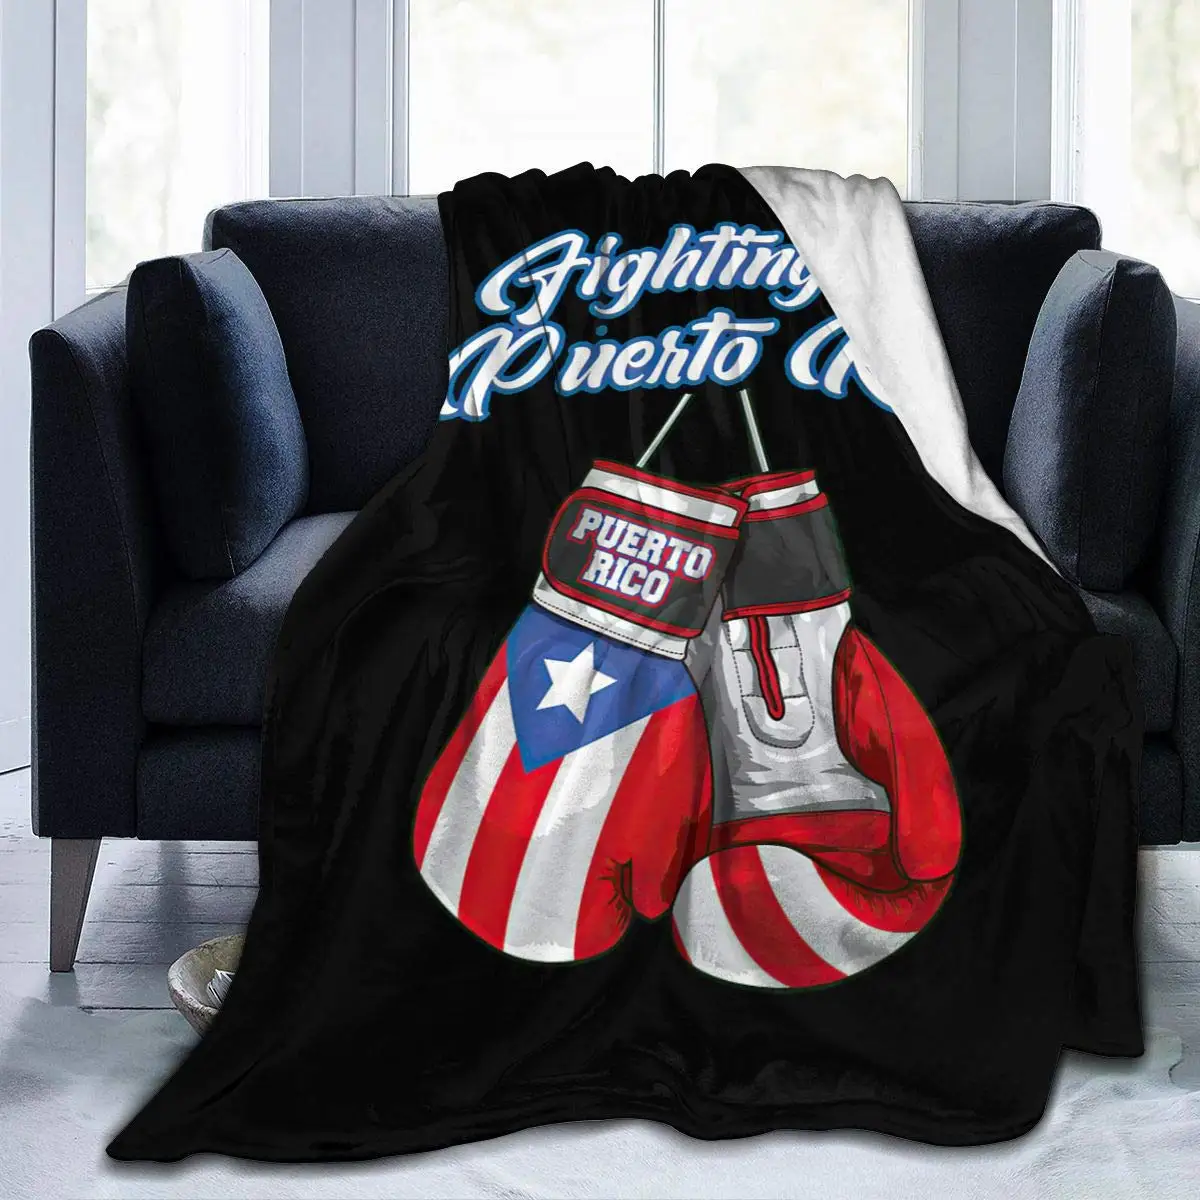 Fighting for Puerto Rico Boxing Gloves Blanket 3D Print Throw Blanket Warm Super Soft Cozy Lunch Break Blanket for Sofa